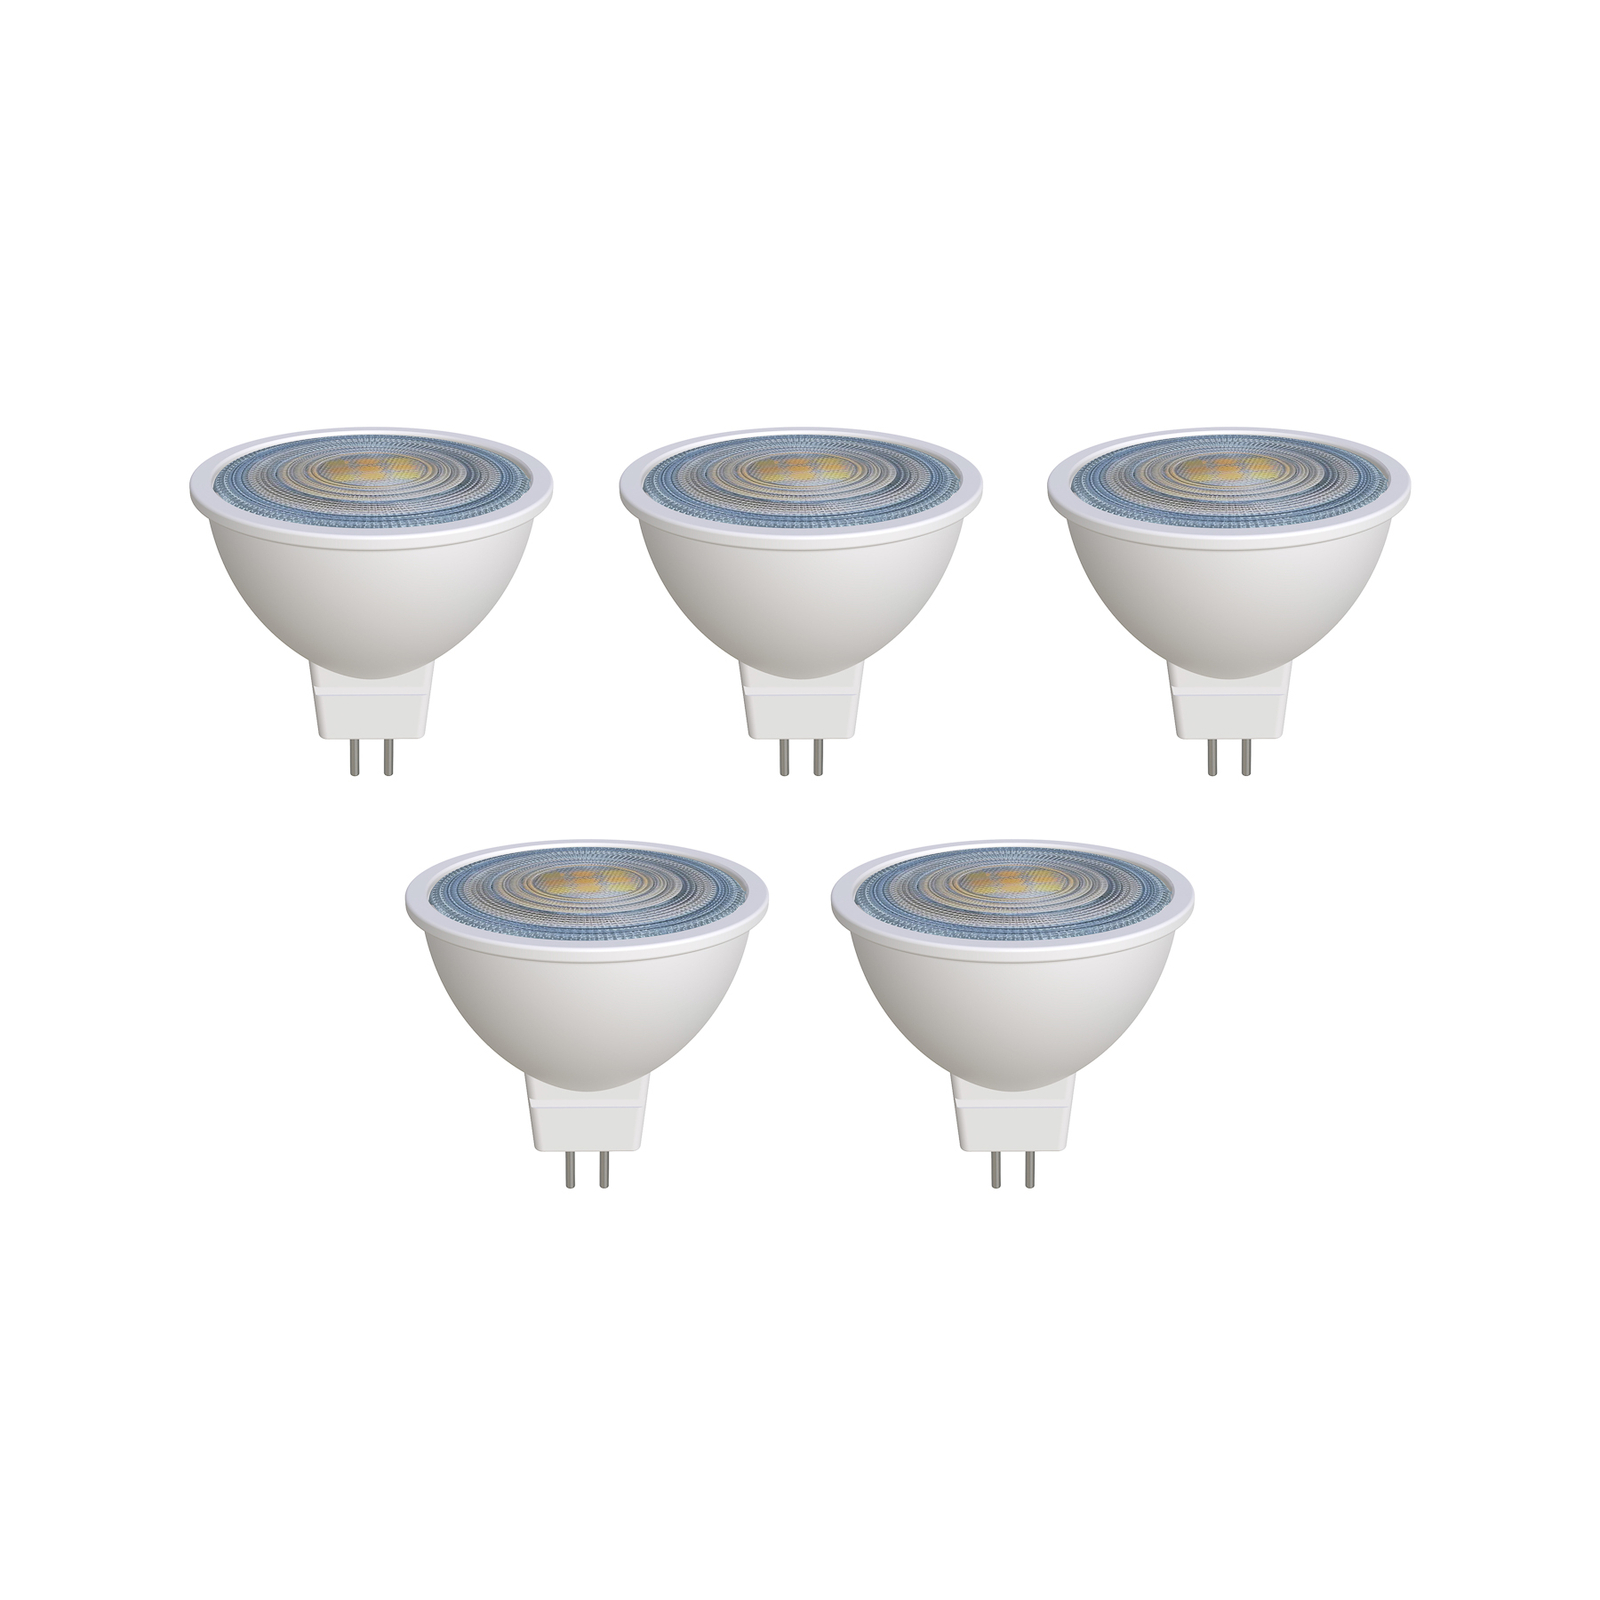 Prios LED refletor GU5.3 7.5W 621lm 36° branco 830 conjunto de 5